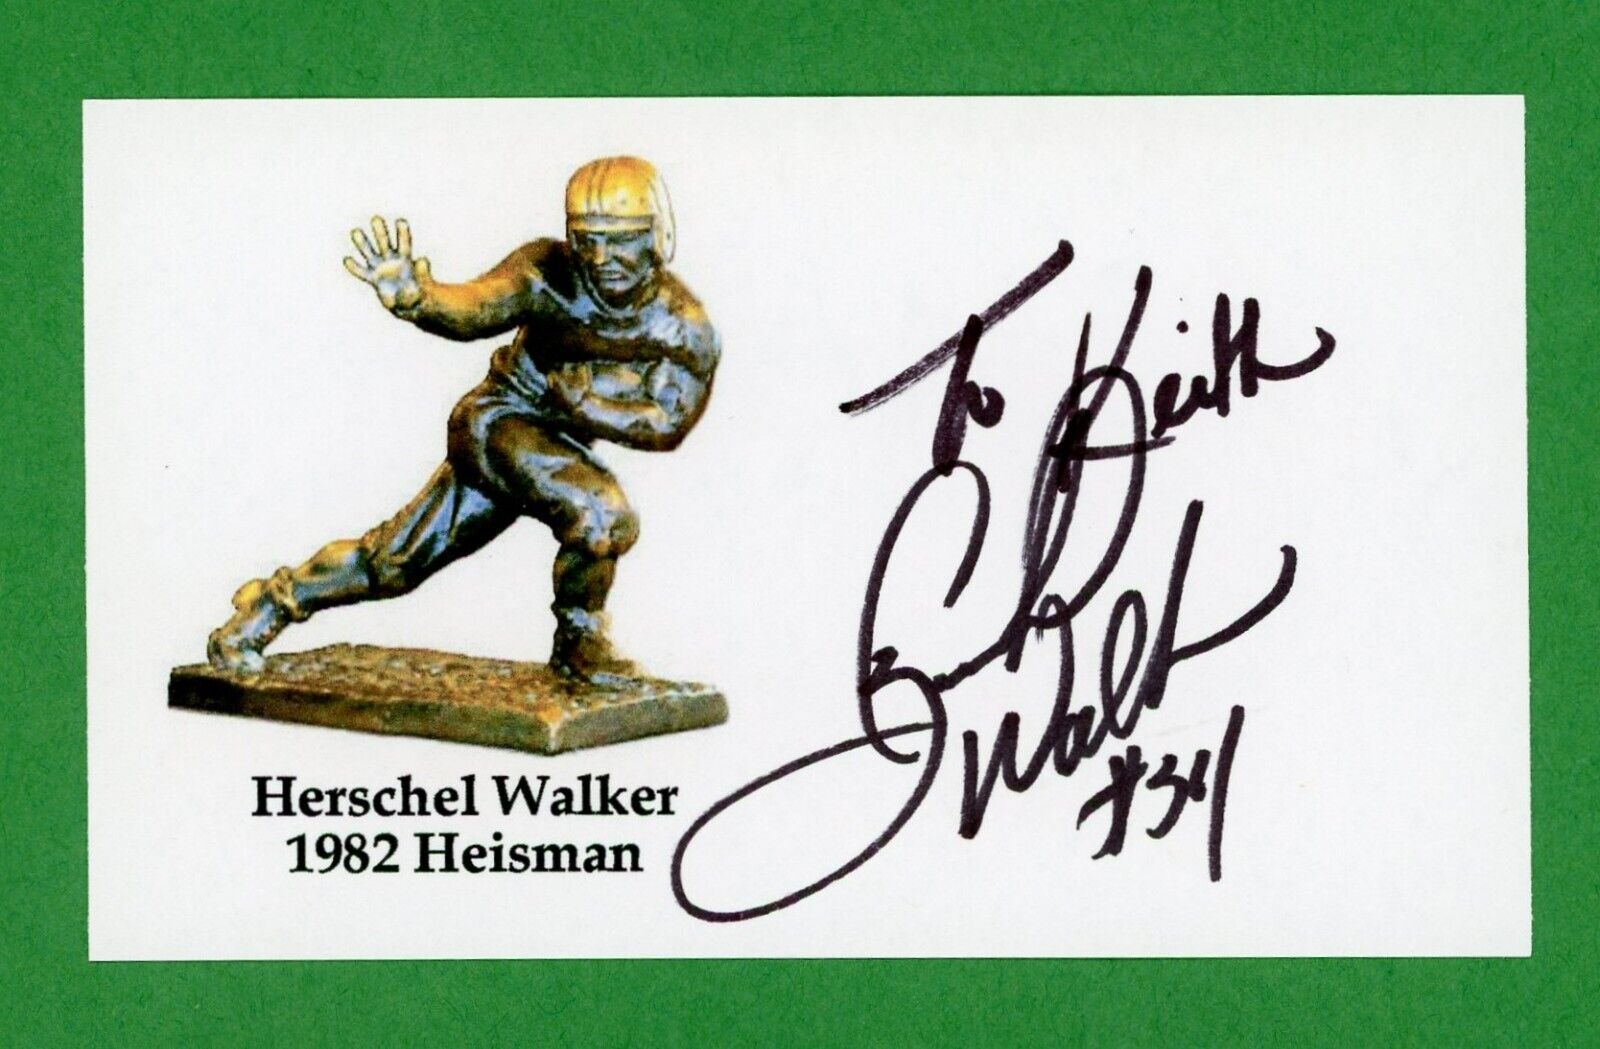 Hershel Walker NCAA Heisman Trophy Winner Football Signed 3x5 Index Card X1410